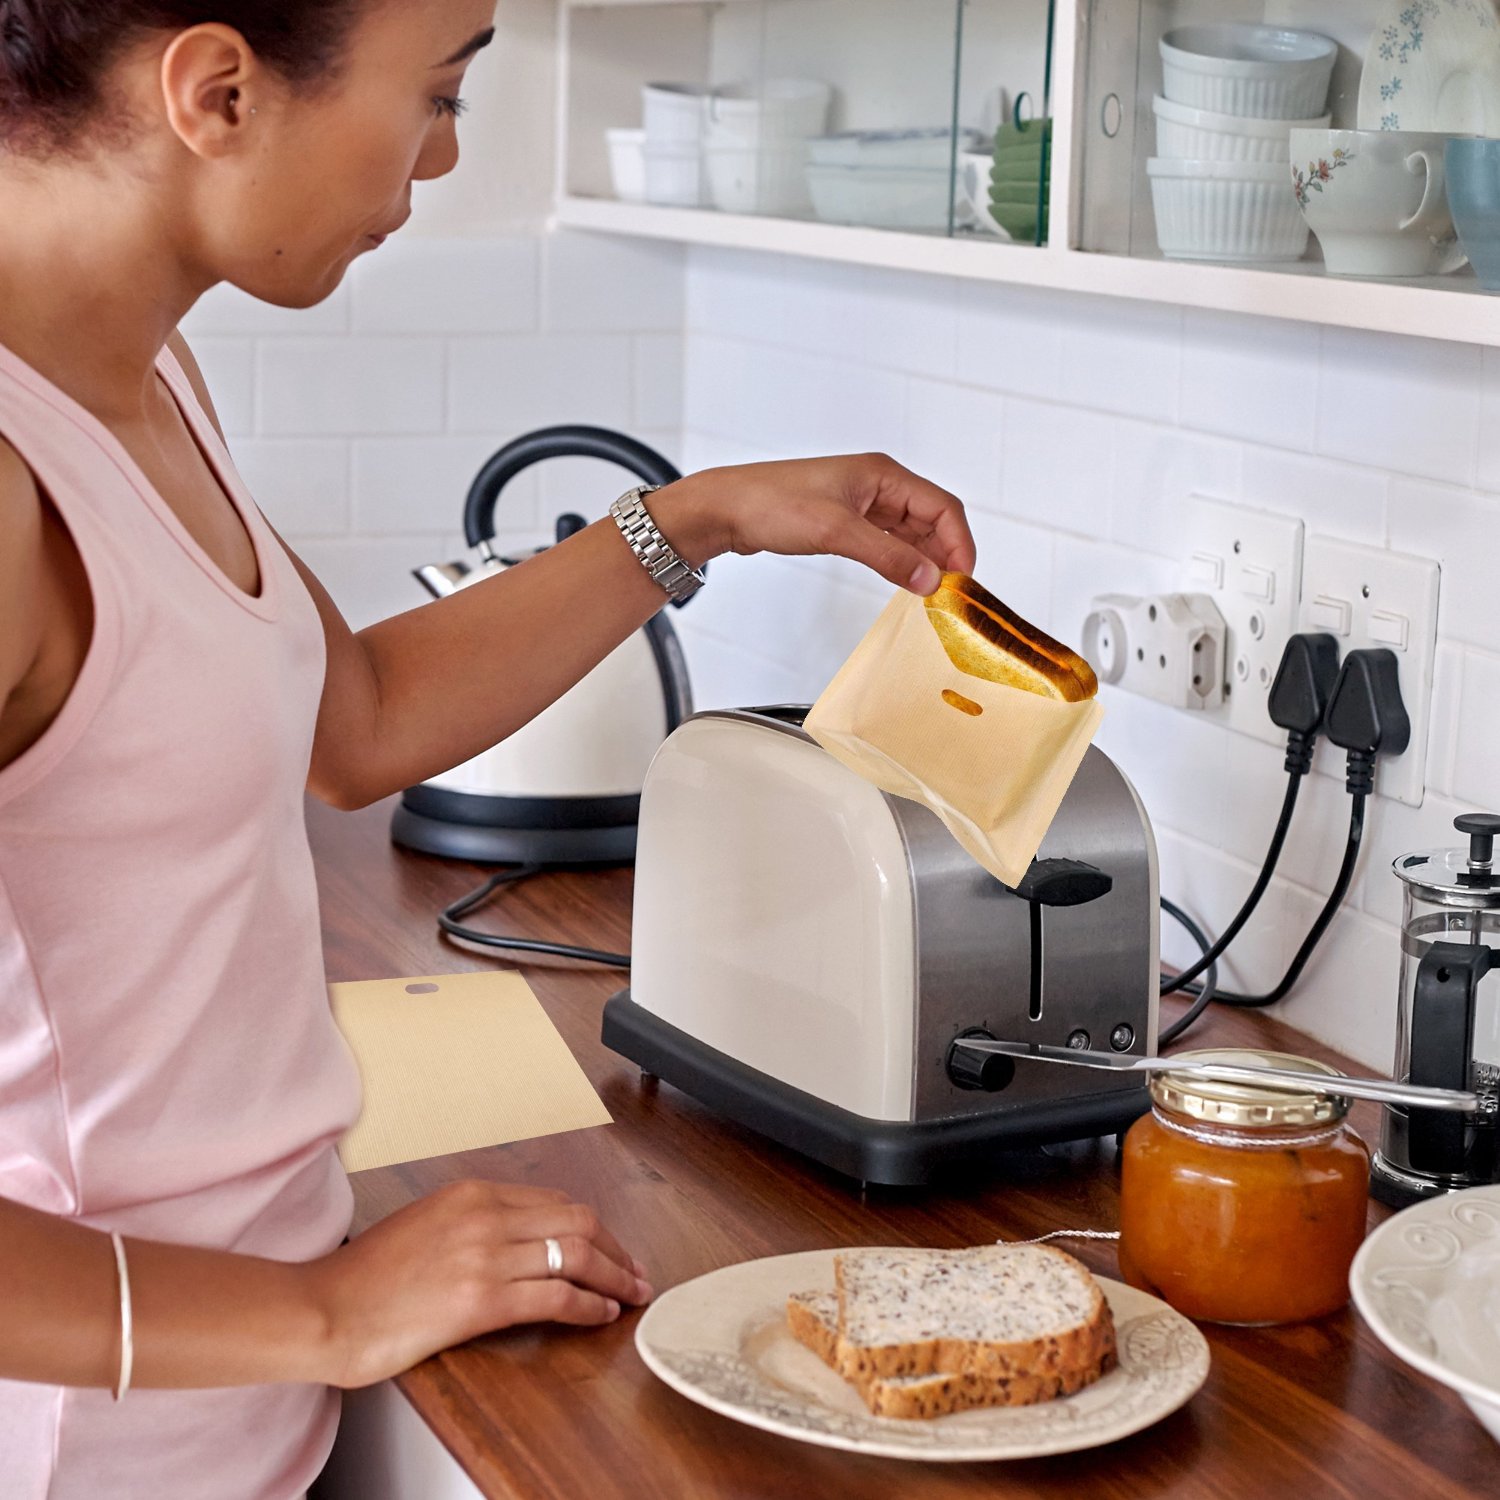 https://spoonacular.com/images/articles/gluten-free-toaster-bags.jpg